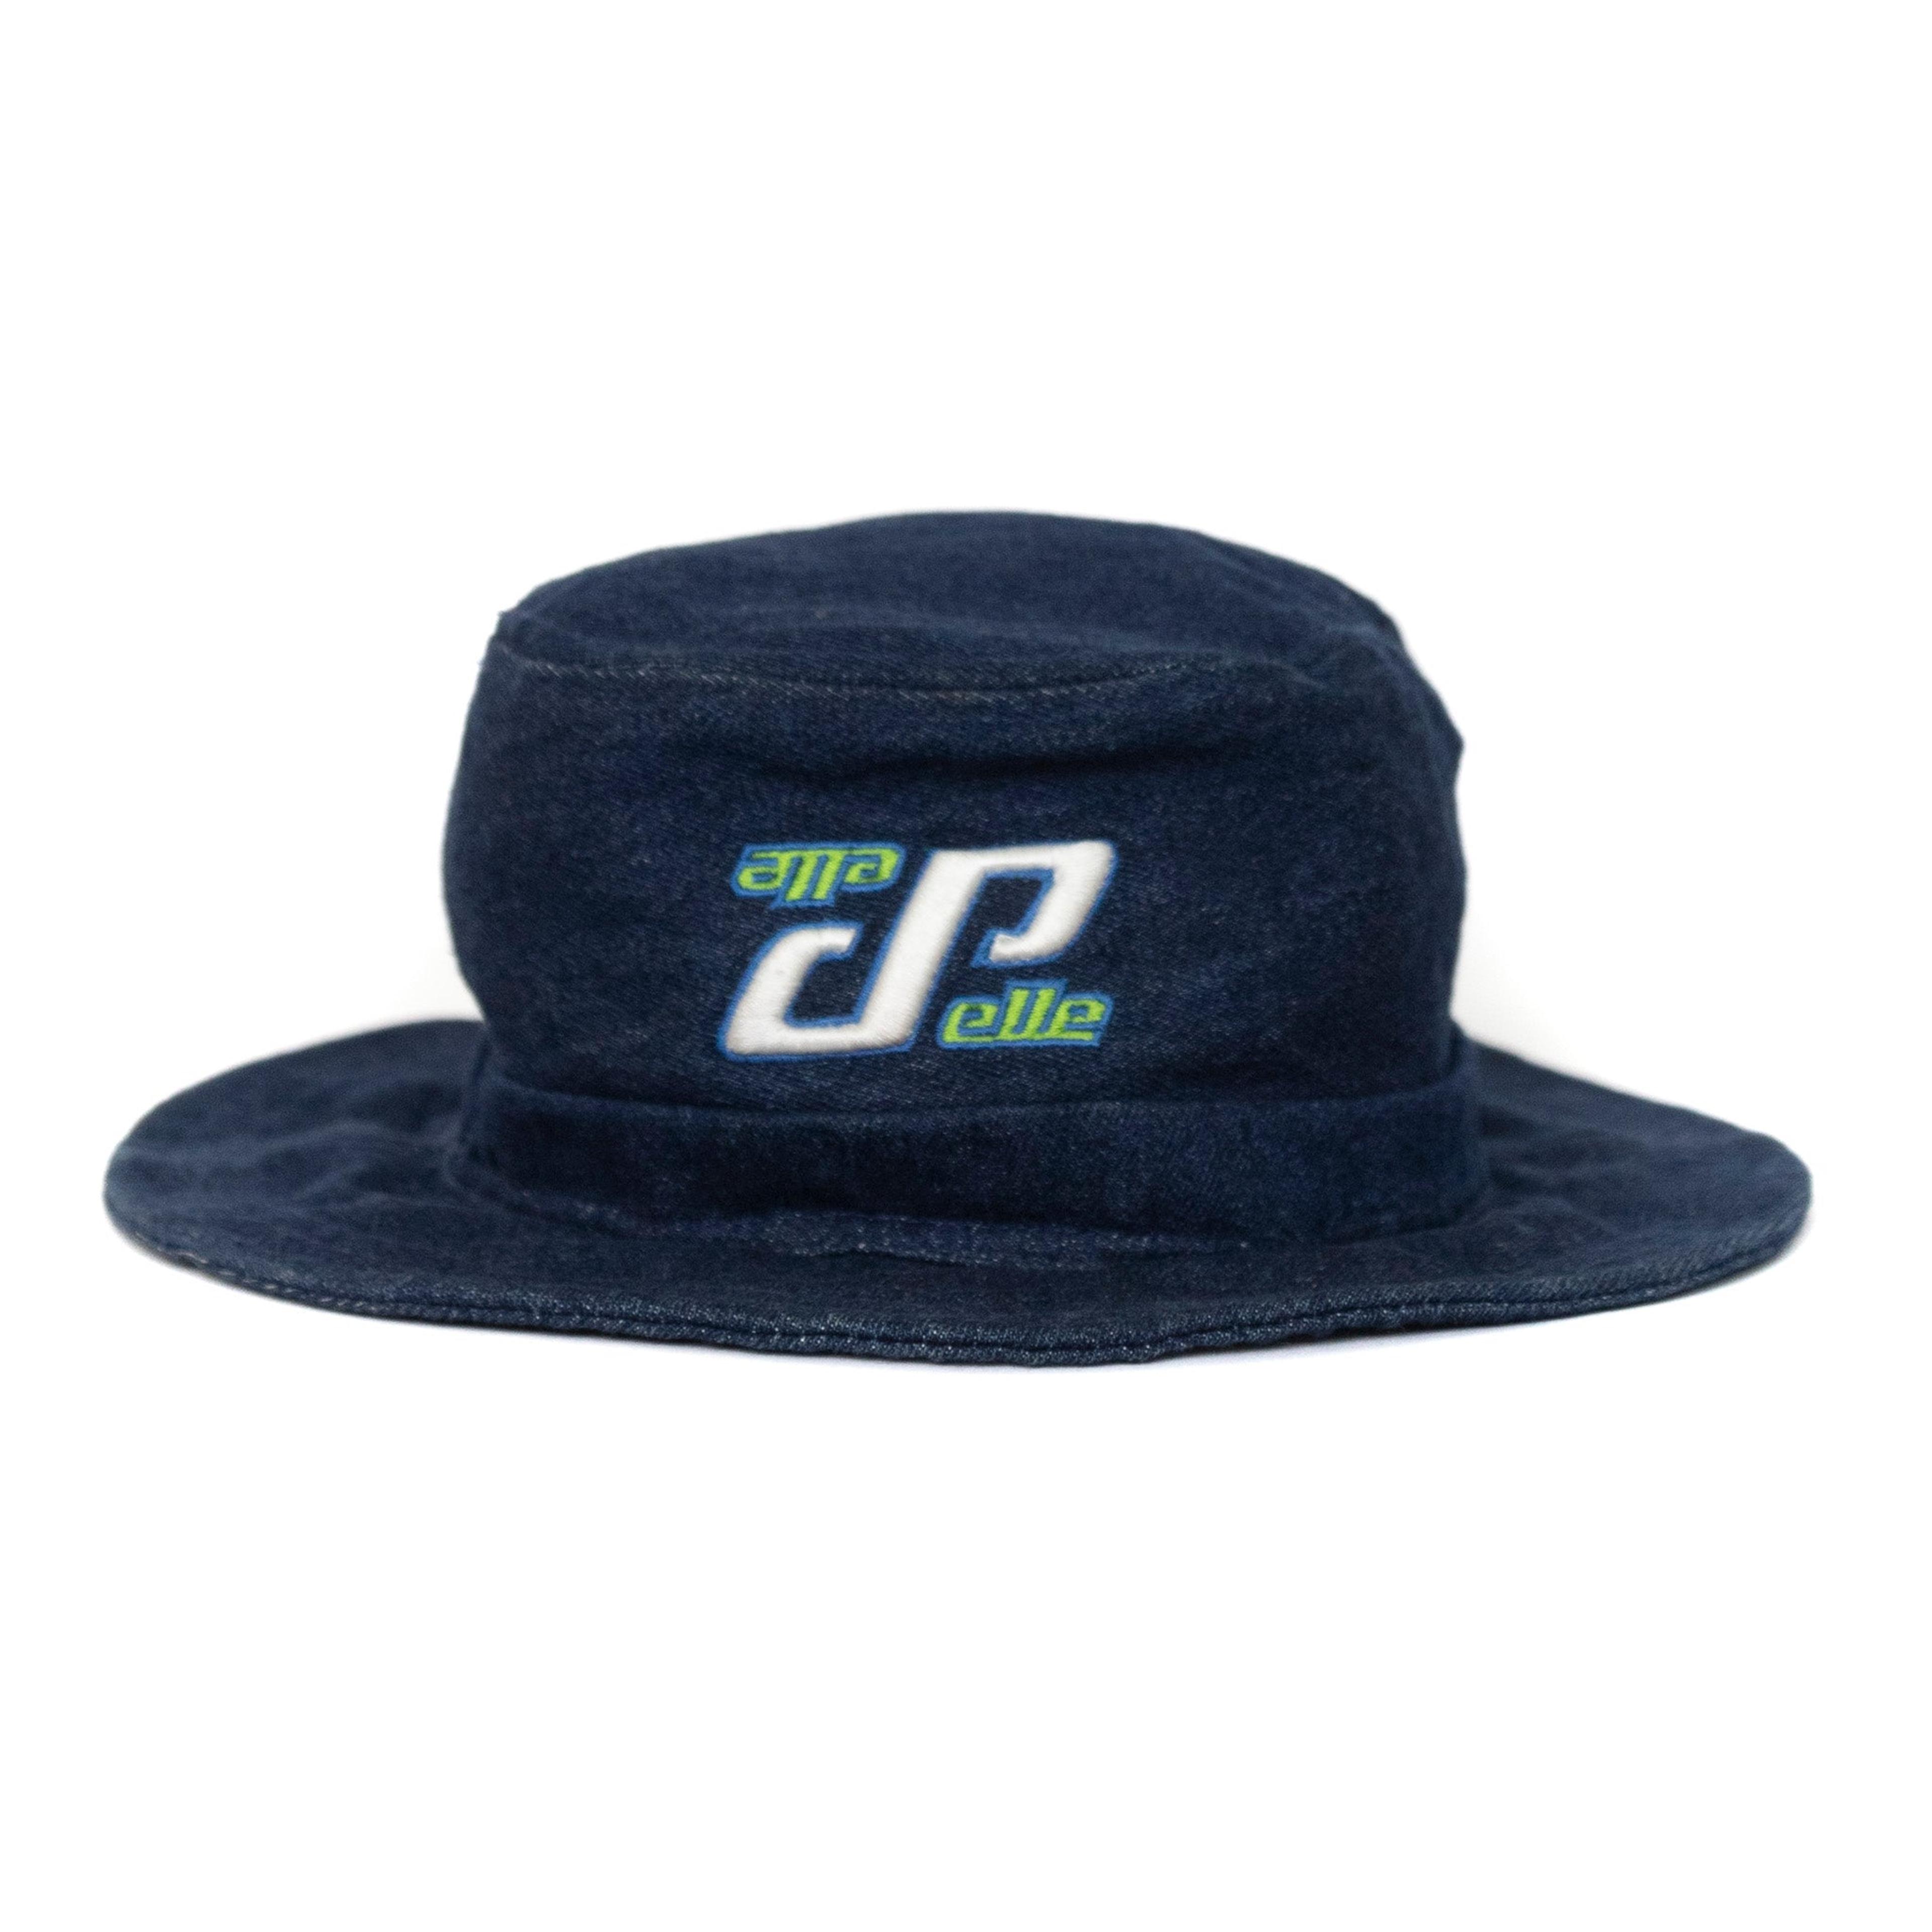 Pelle Pelle Graphic Denim Bucket Hat